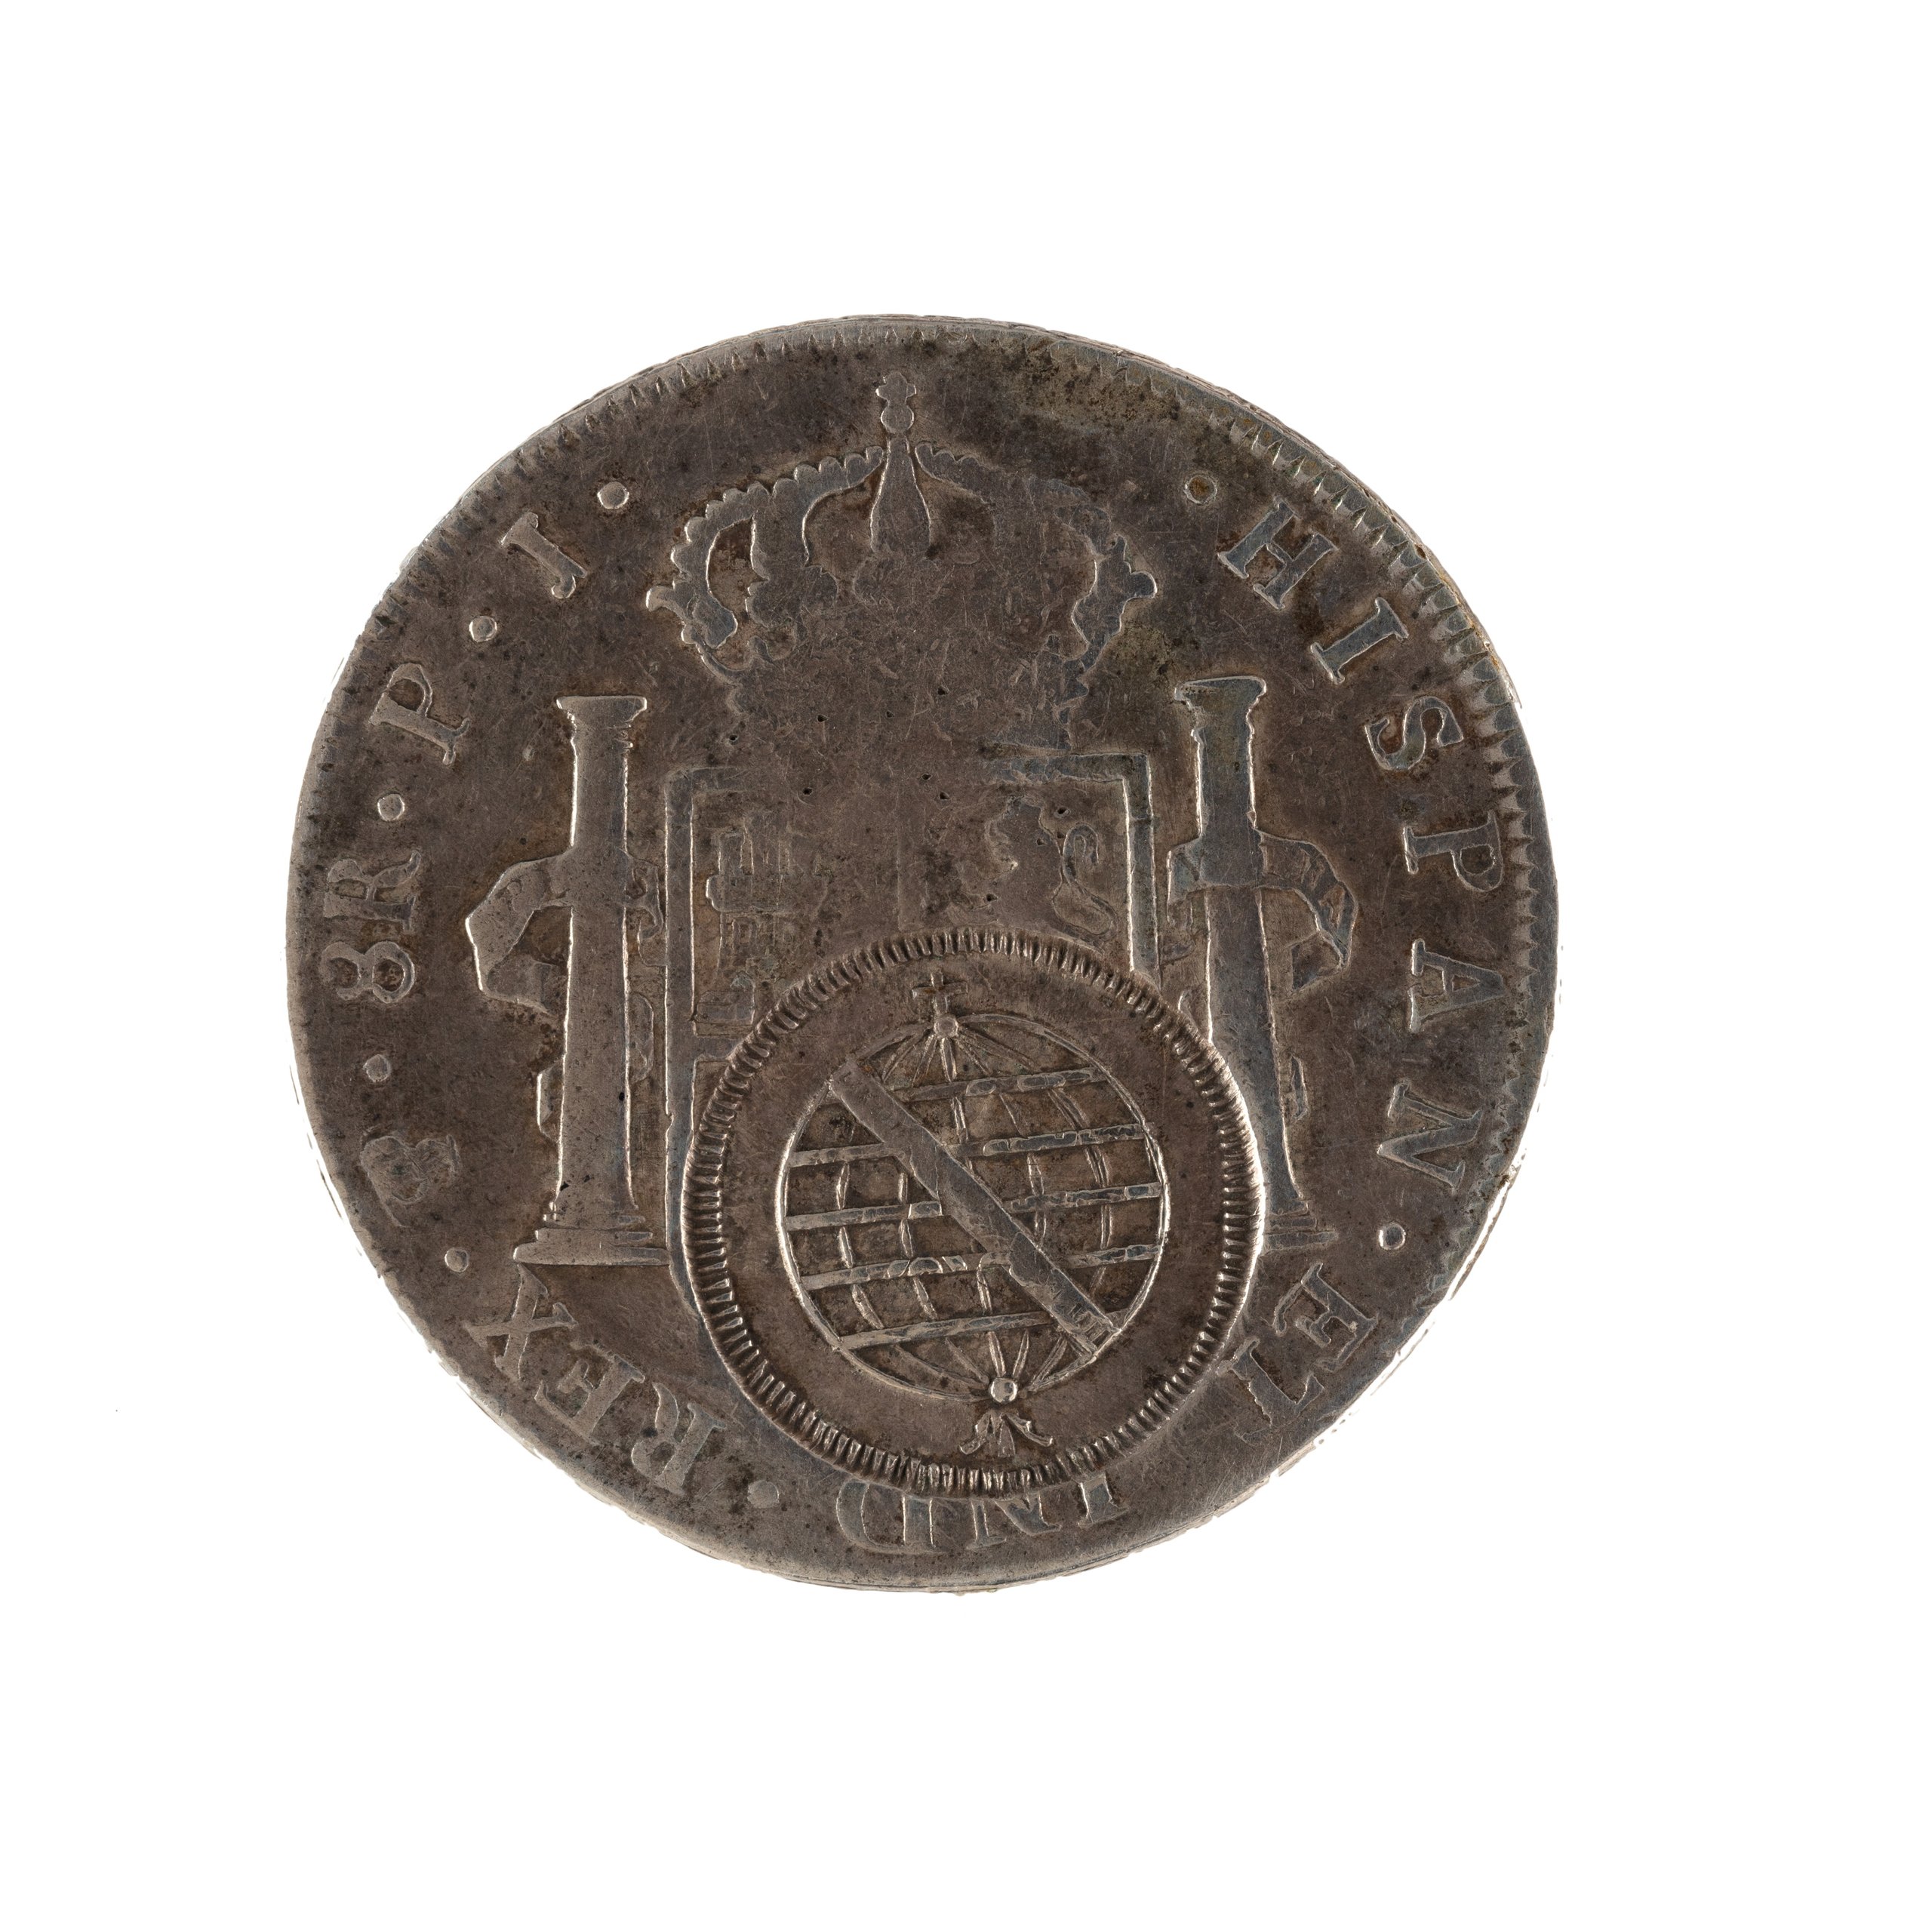 Overstamped Brazilian Nine Hundred Sixty Reis coin